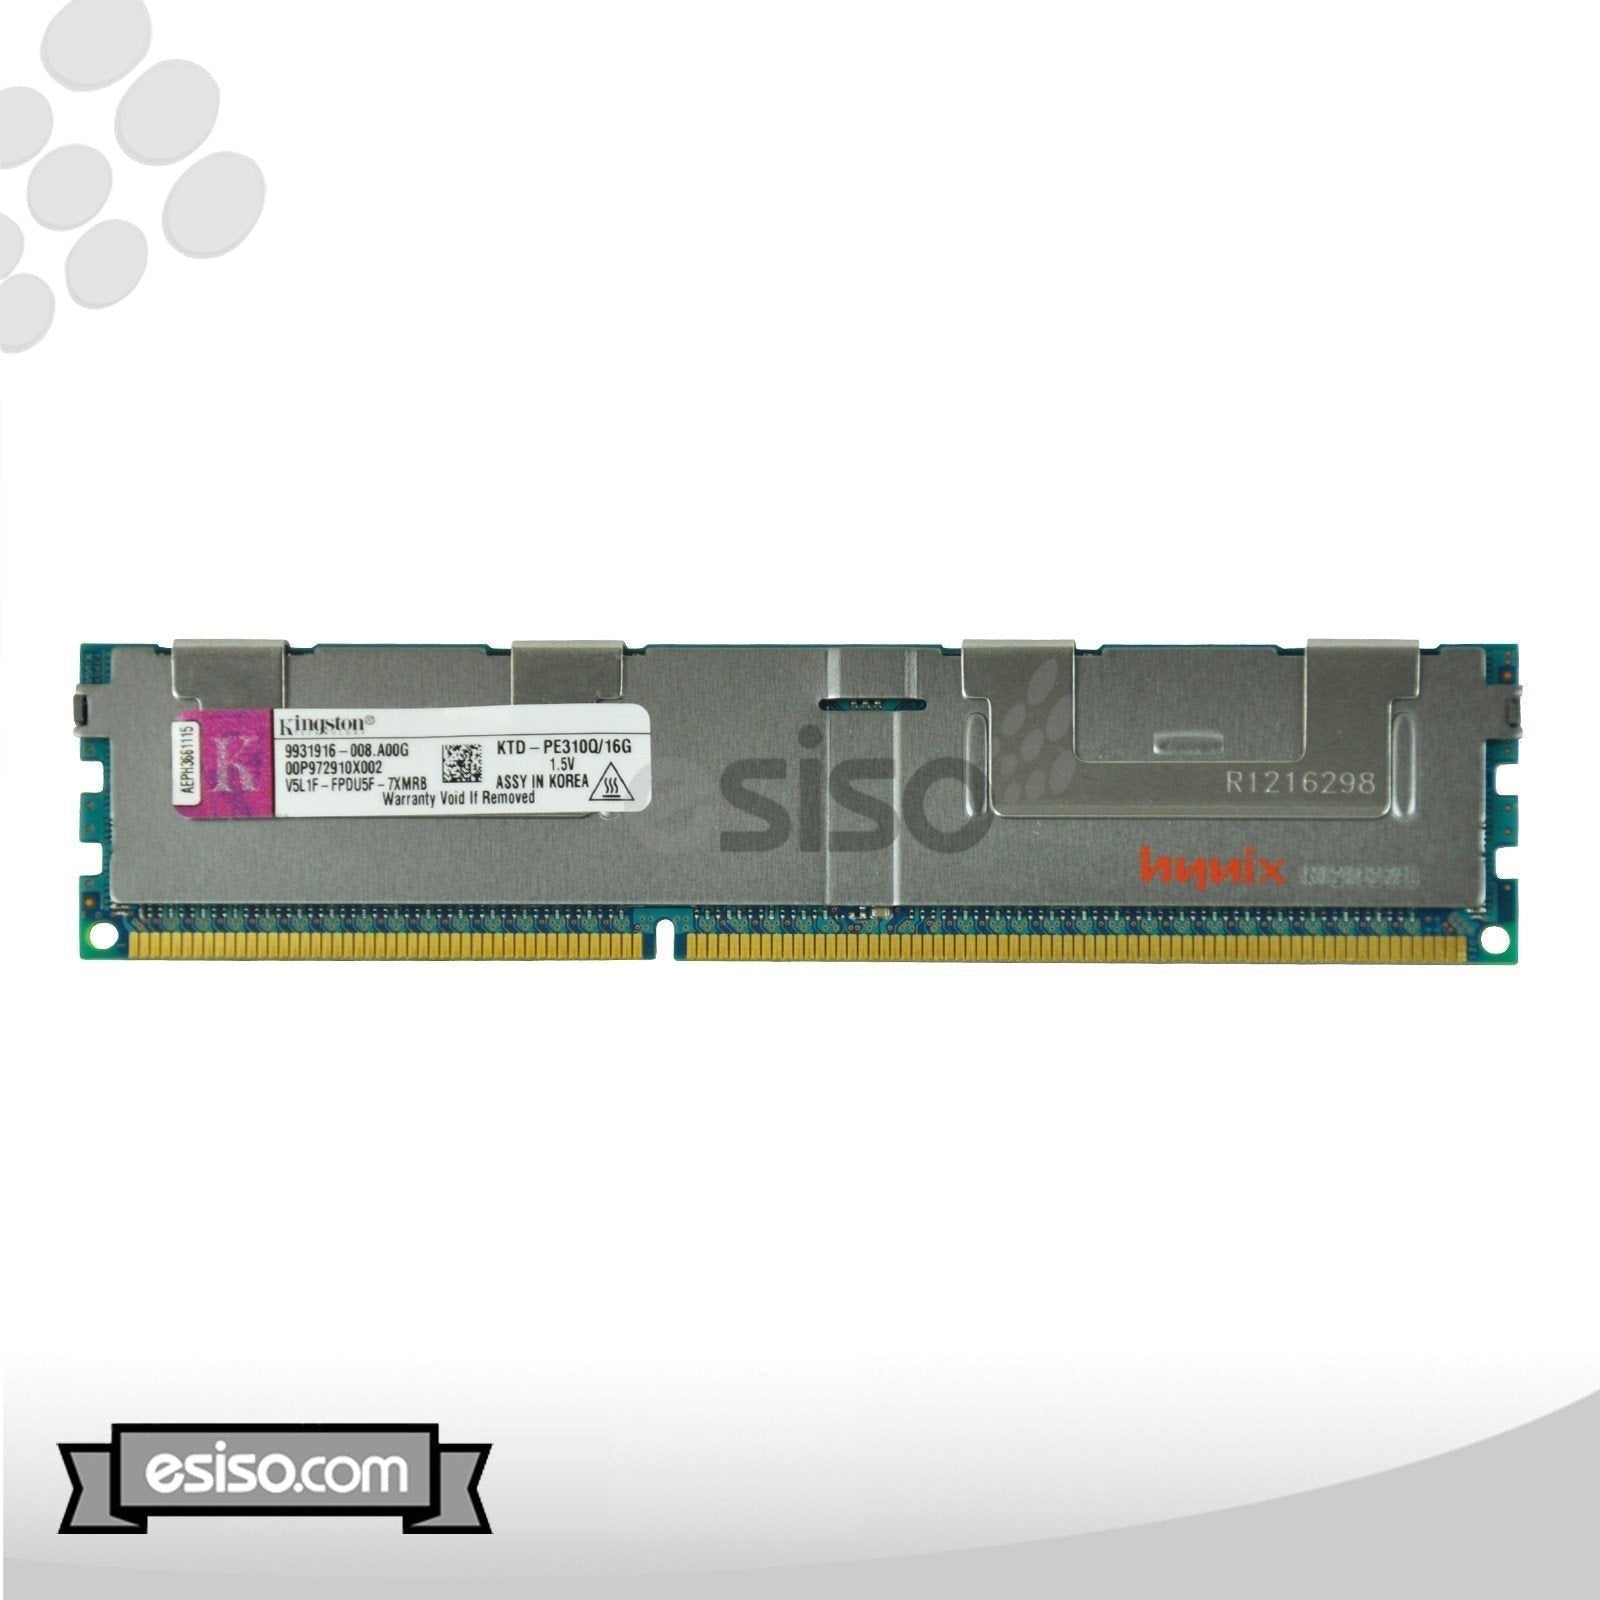 KTD-PE310Q/16G KINGSTON 16GB PC3-8500R DDR3 1.5V MEMORY MODULE (1x16GB)